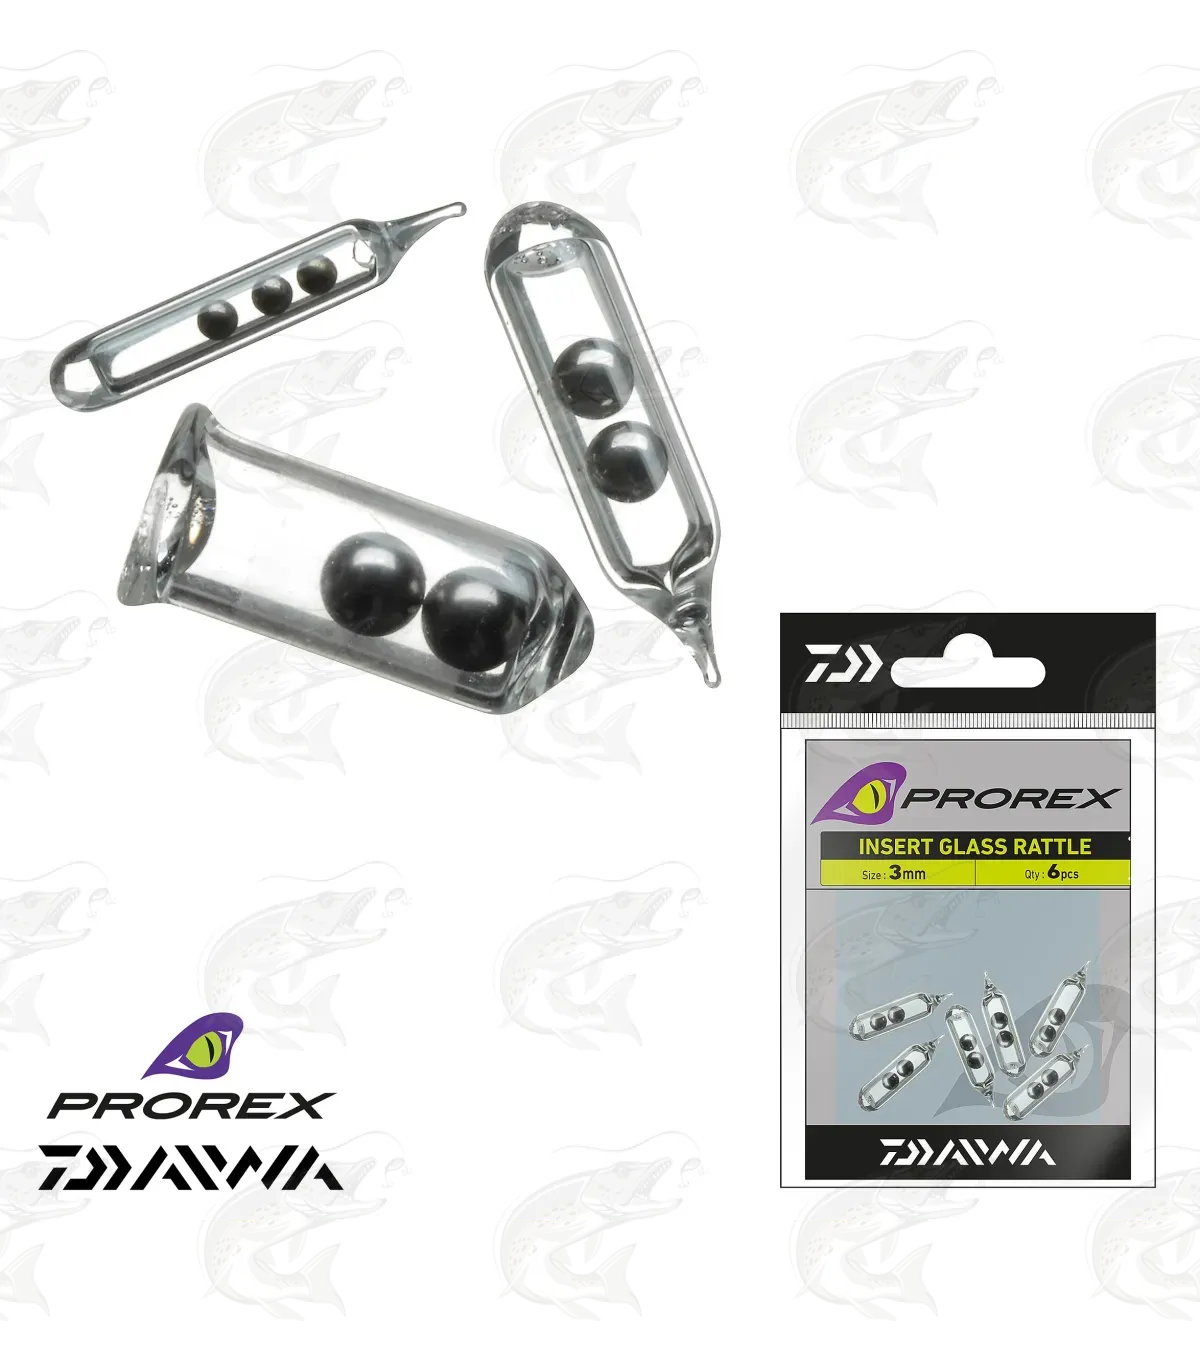 Daiwa Prorex Screw-In Insert Glass Rattle